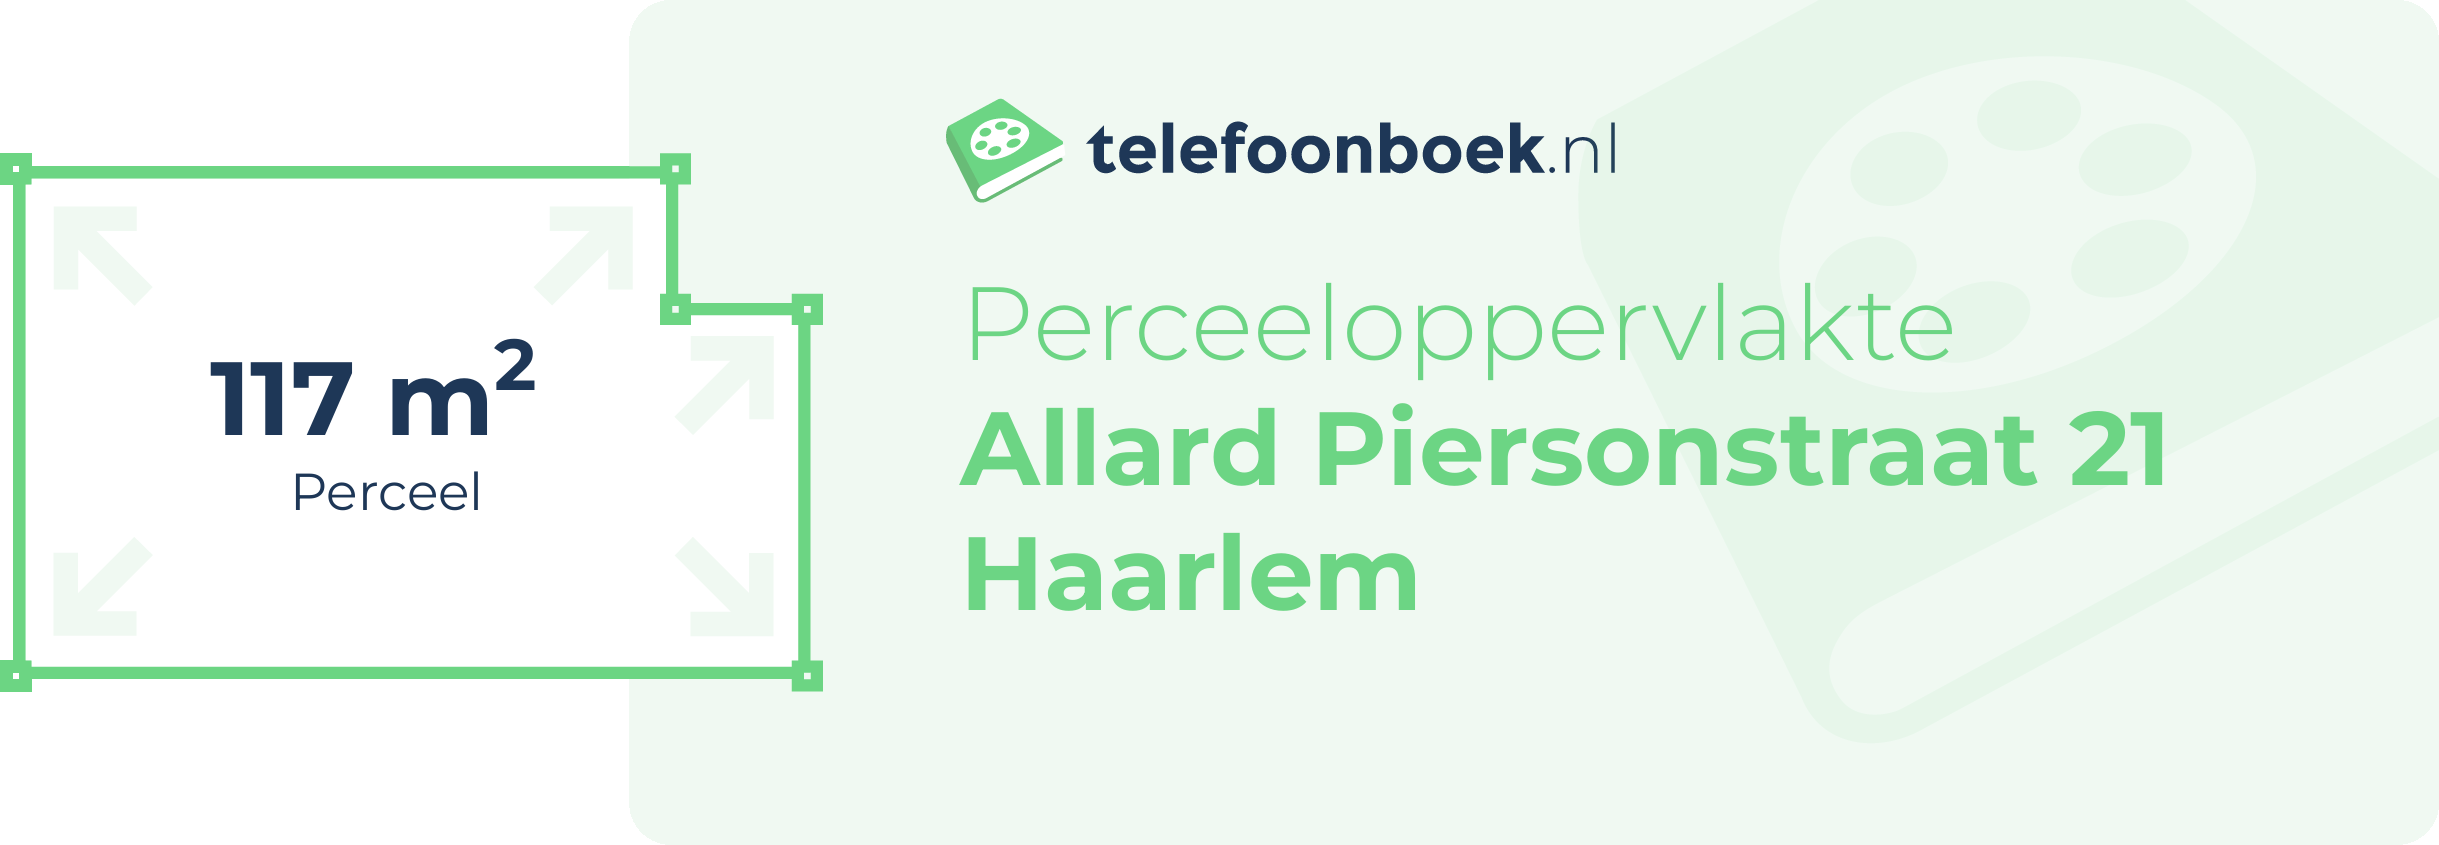 Perceeloppervlakte Allard Piersonstraat 21 Haarlem